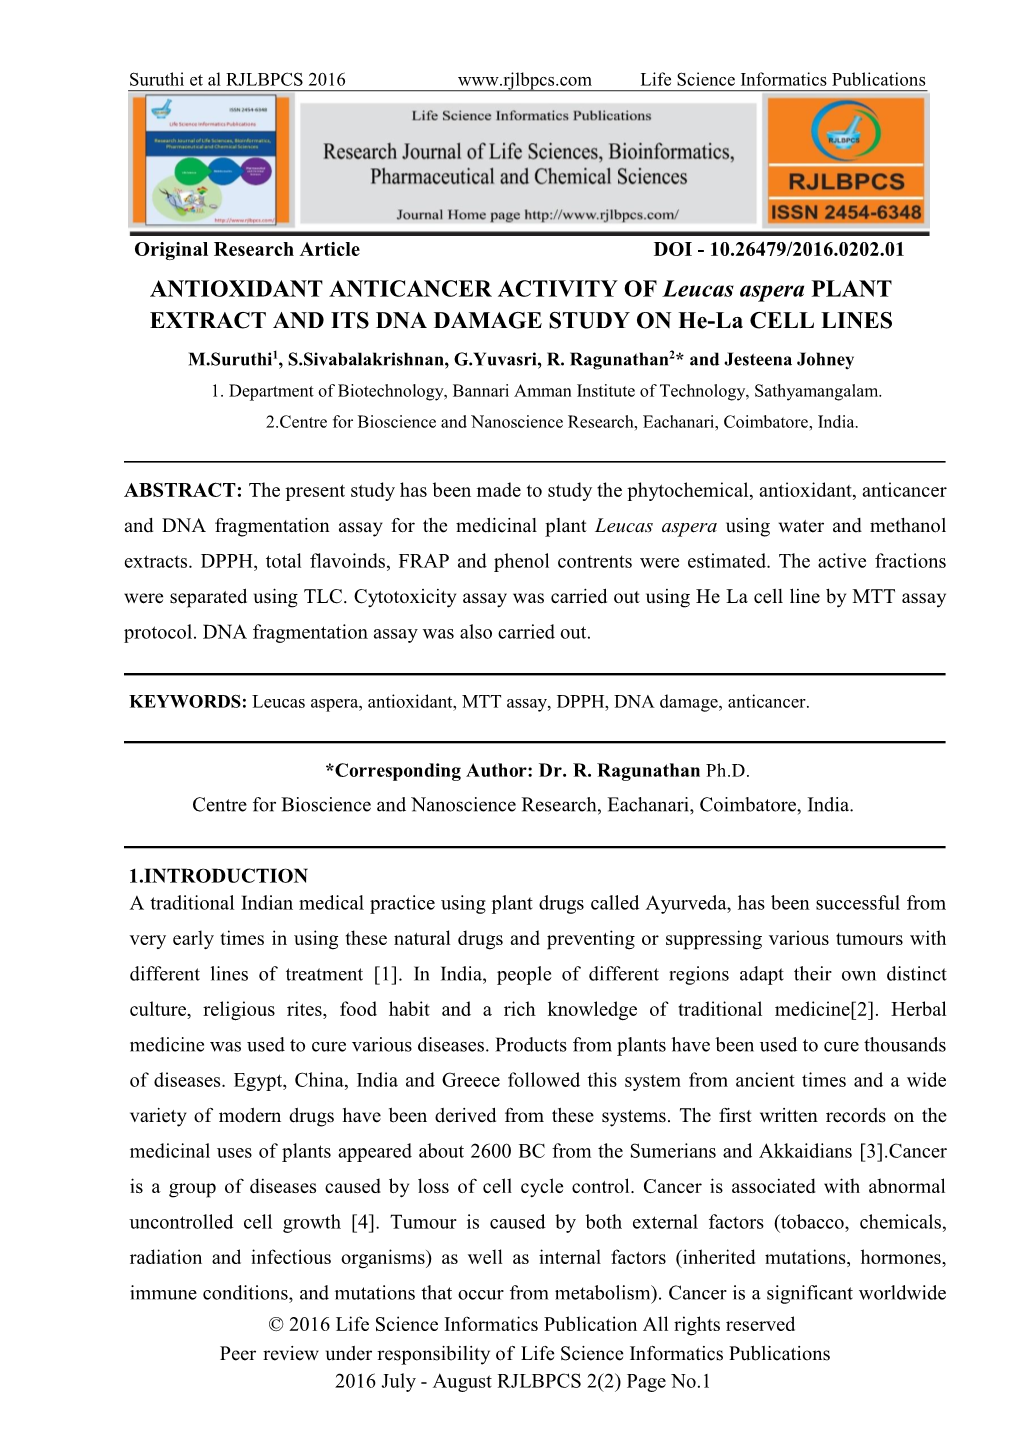 ANTIOXIDANT ANTICANCER ACTIVITY of Leucas Aspera PLANT EXTRACT and ITS DNA DAMAGE STUDY on He-La CELL LINES M.Suruthi1, S.Sivabalakrishnan, G.Yuvasri, R